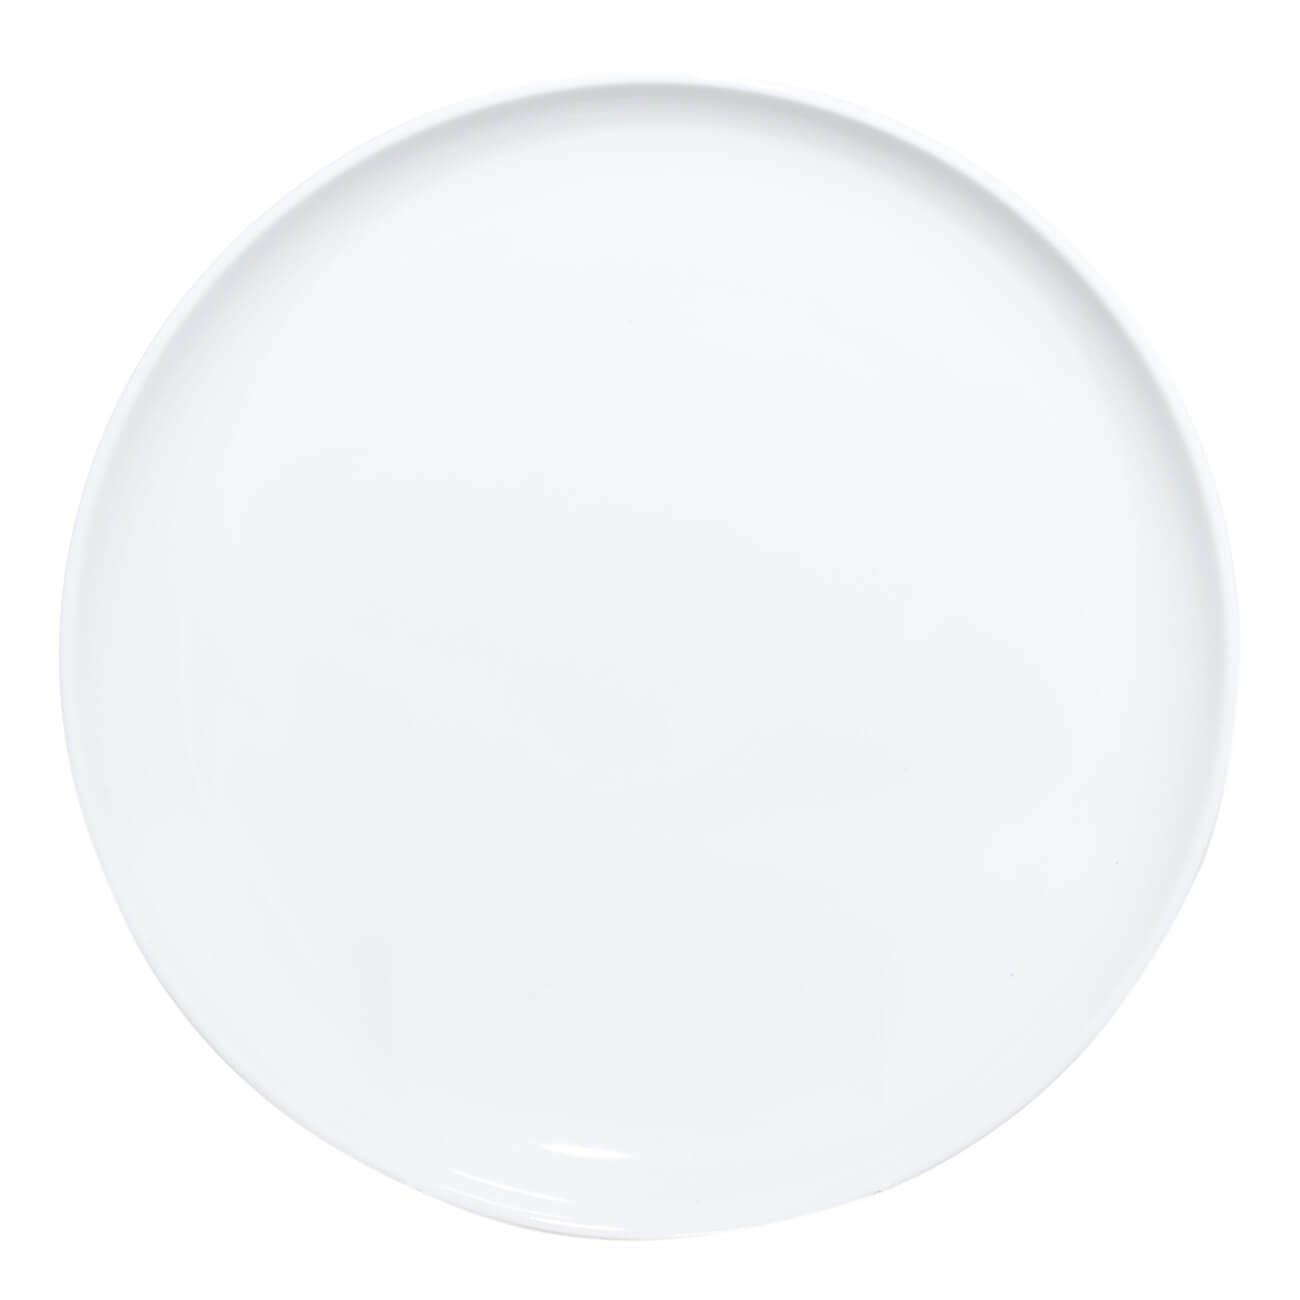 Тарелка обеденная, 25 см, фарфор P, белая, Silence тарелка обеденная 29 см фарфор f белая bend silver